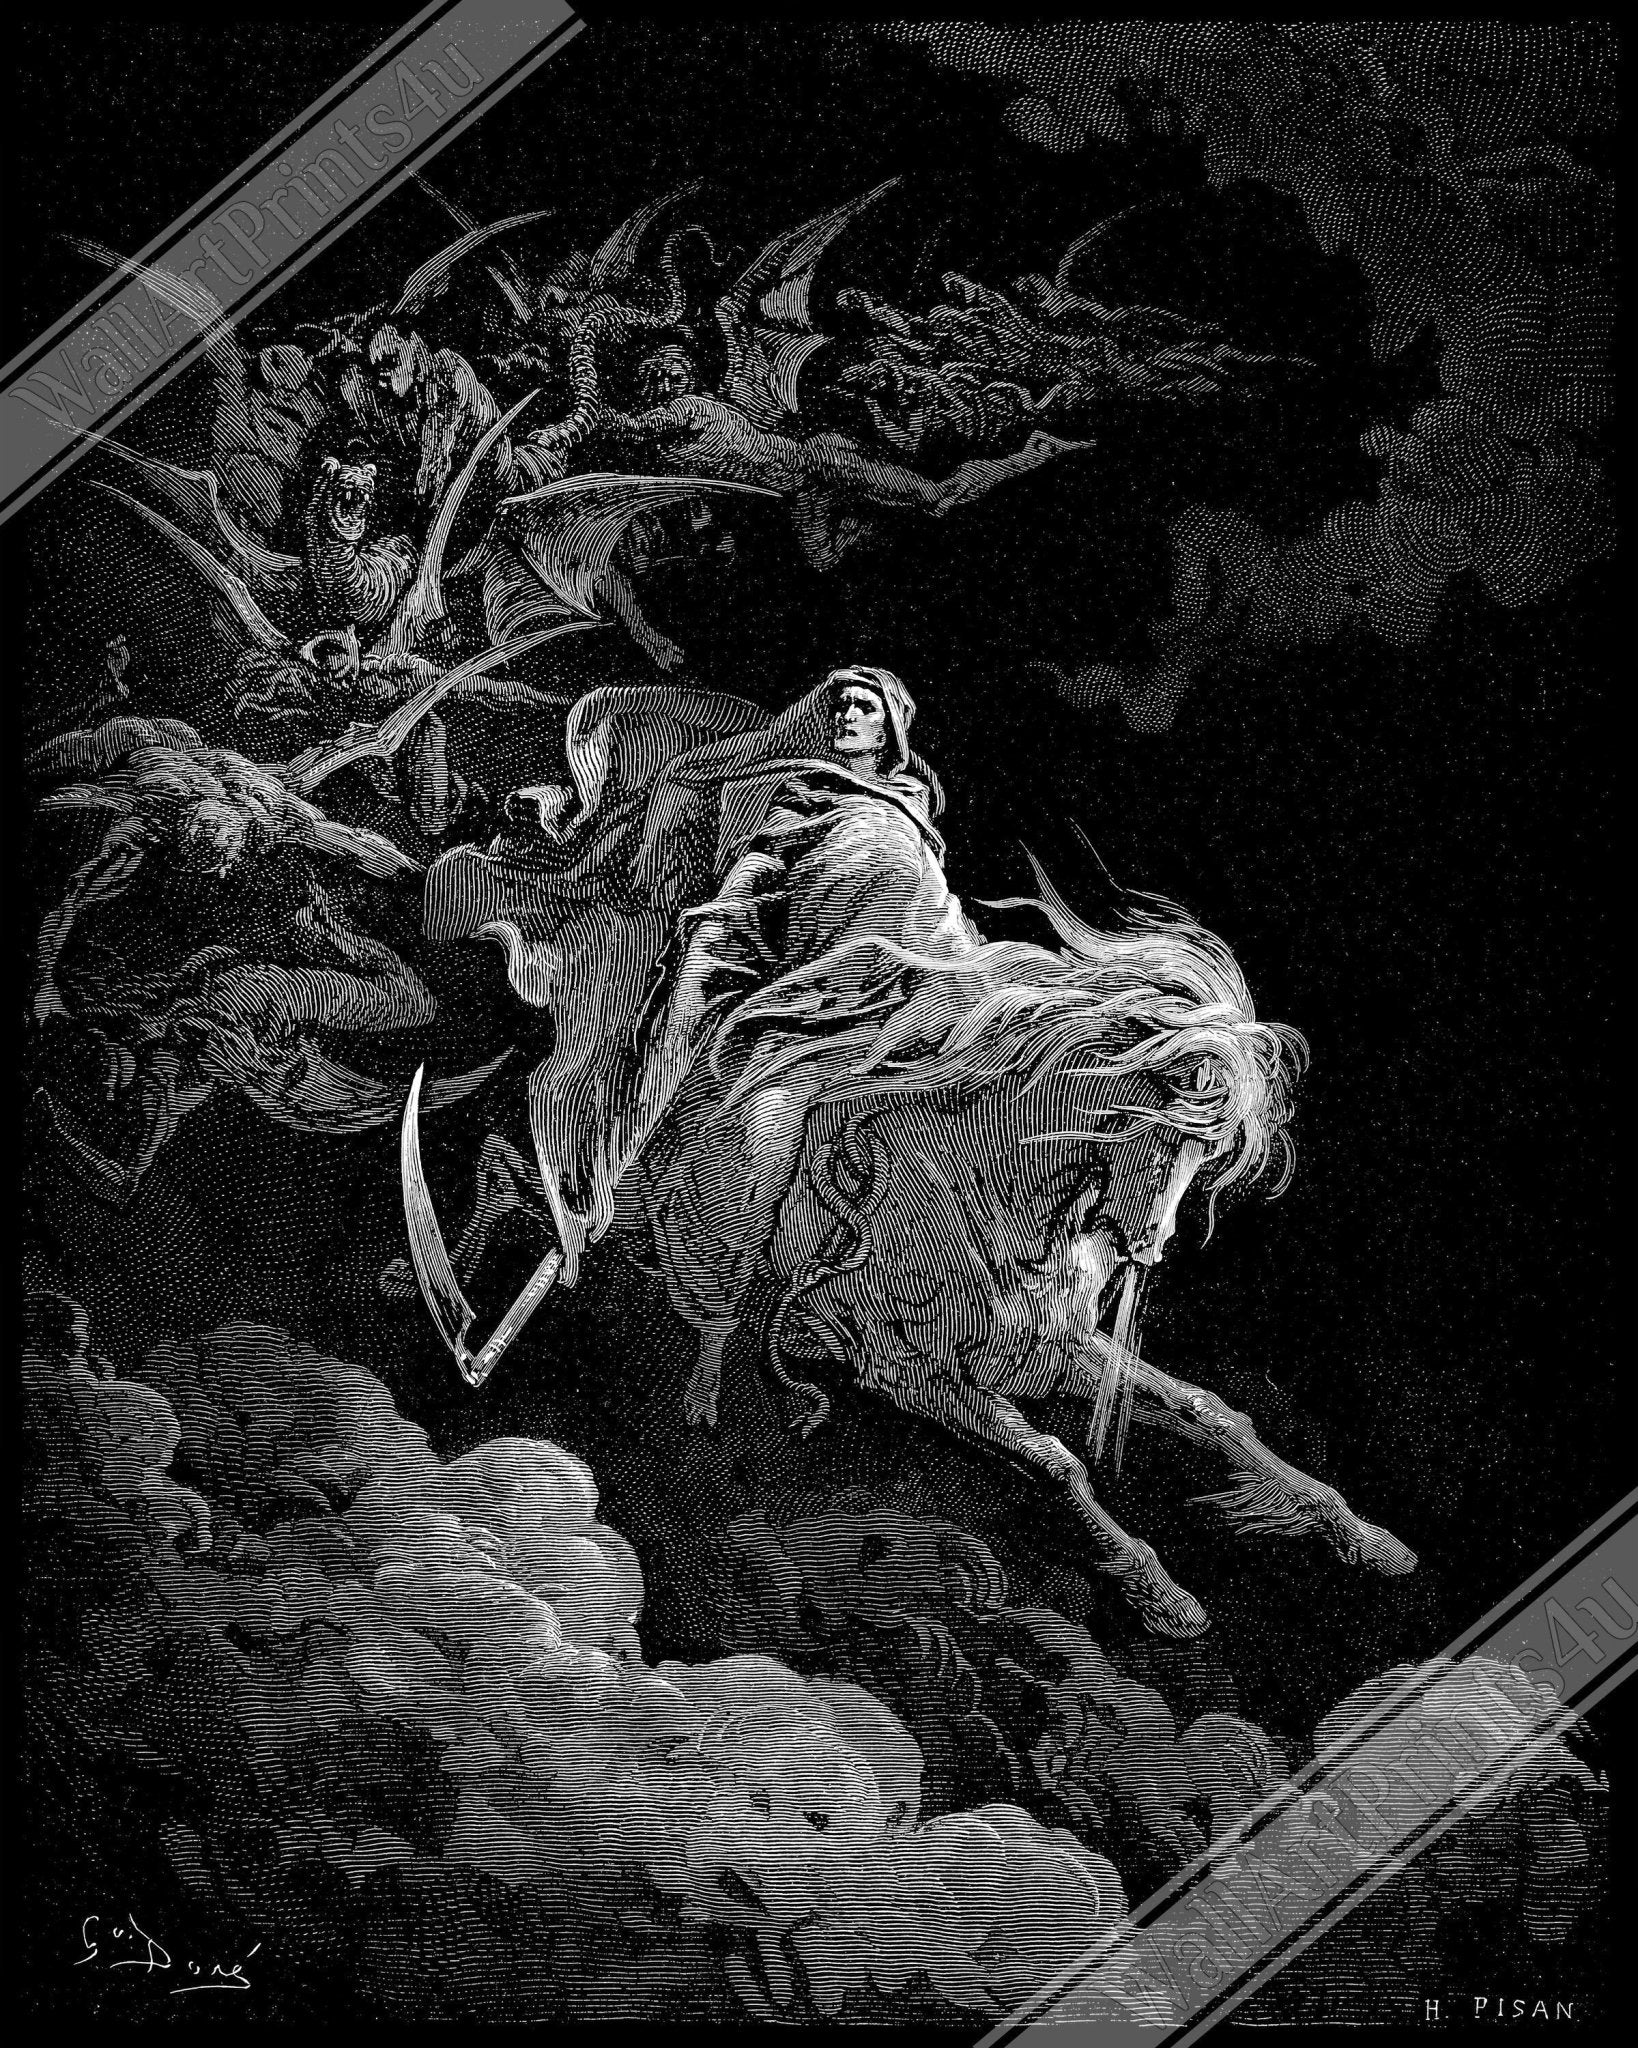 Gustave Dore Poster - Death On A Pale Horse Print, From La Grand Bible De Tours 1843 - WallArtPrints4U